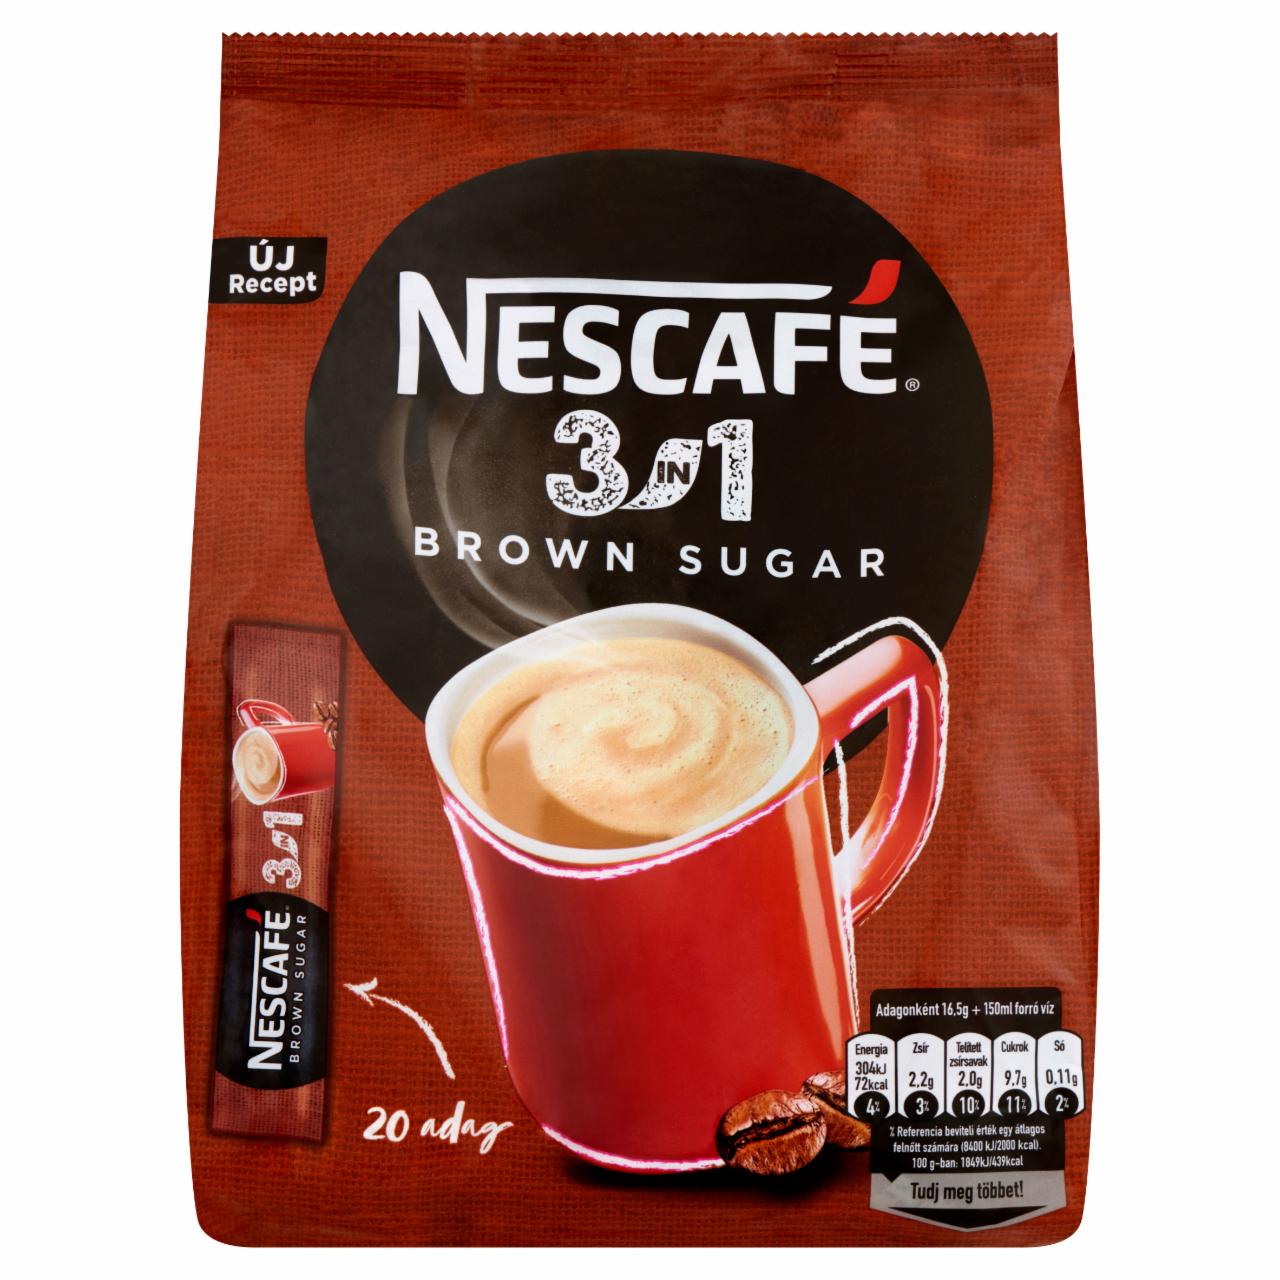 Képek - Nescafé 3in1 Brown Sugar